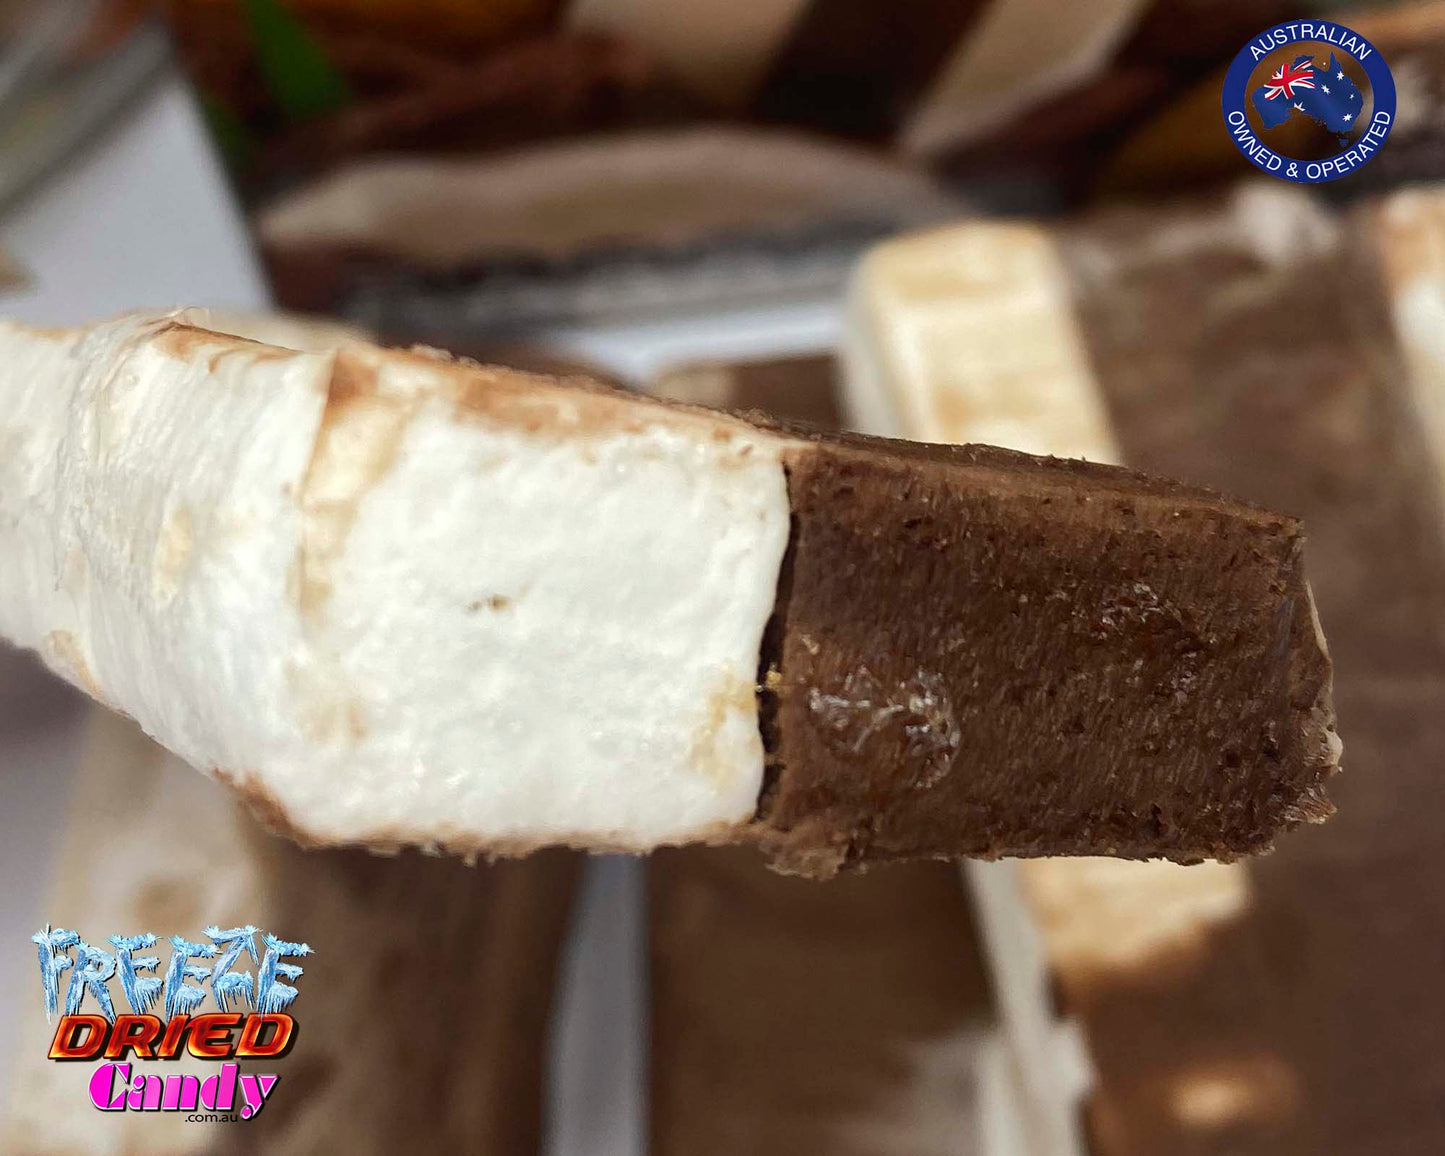 Freeze Dried Ice Cream WEIS® Bar - Dark Chocolate & Coconut 